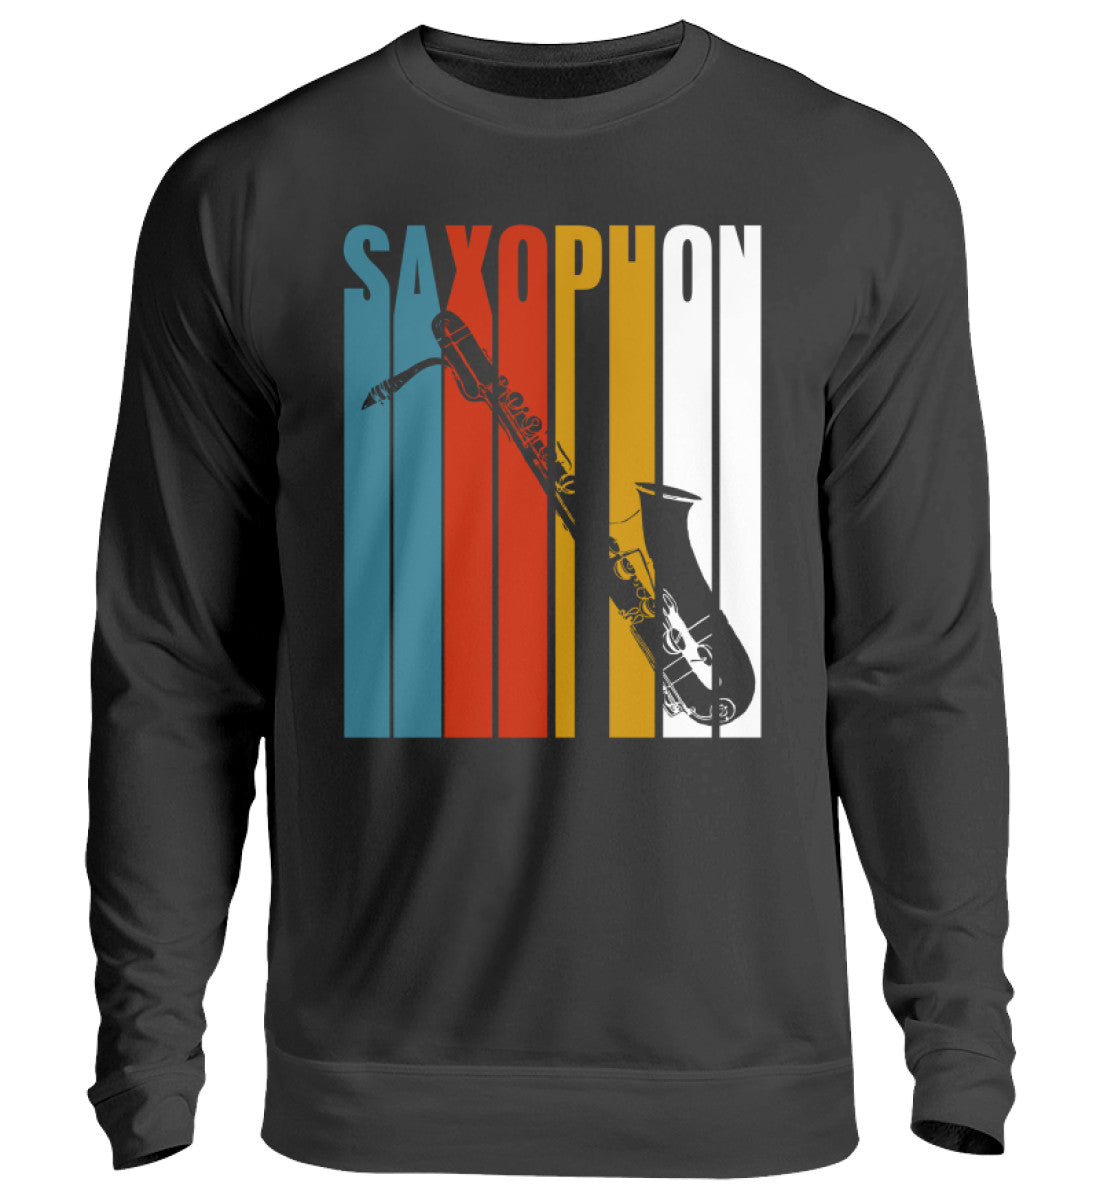 Bass-Saxophon Pullover